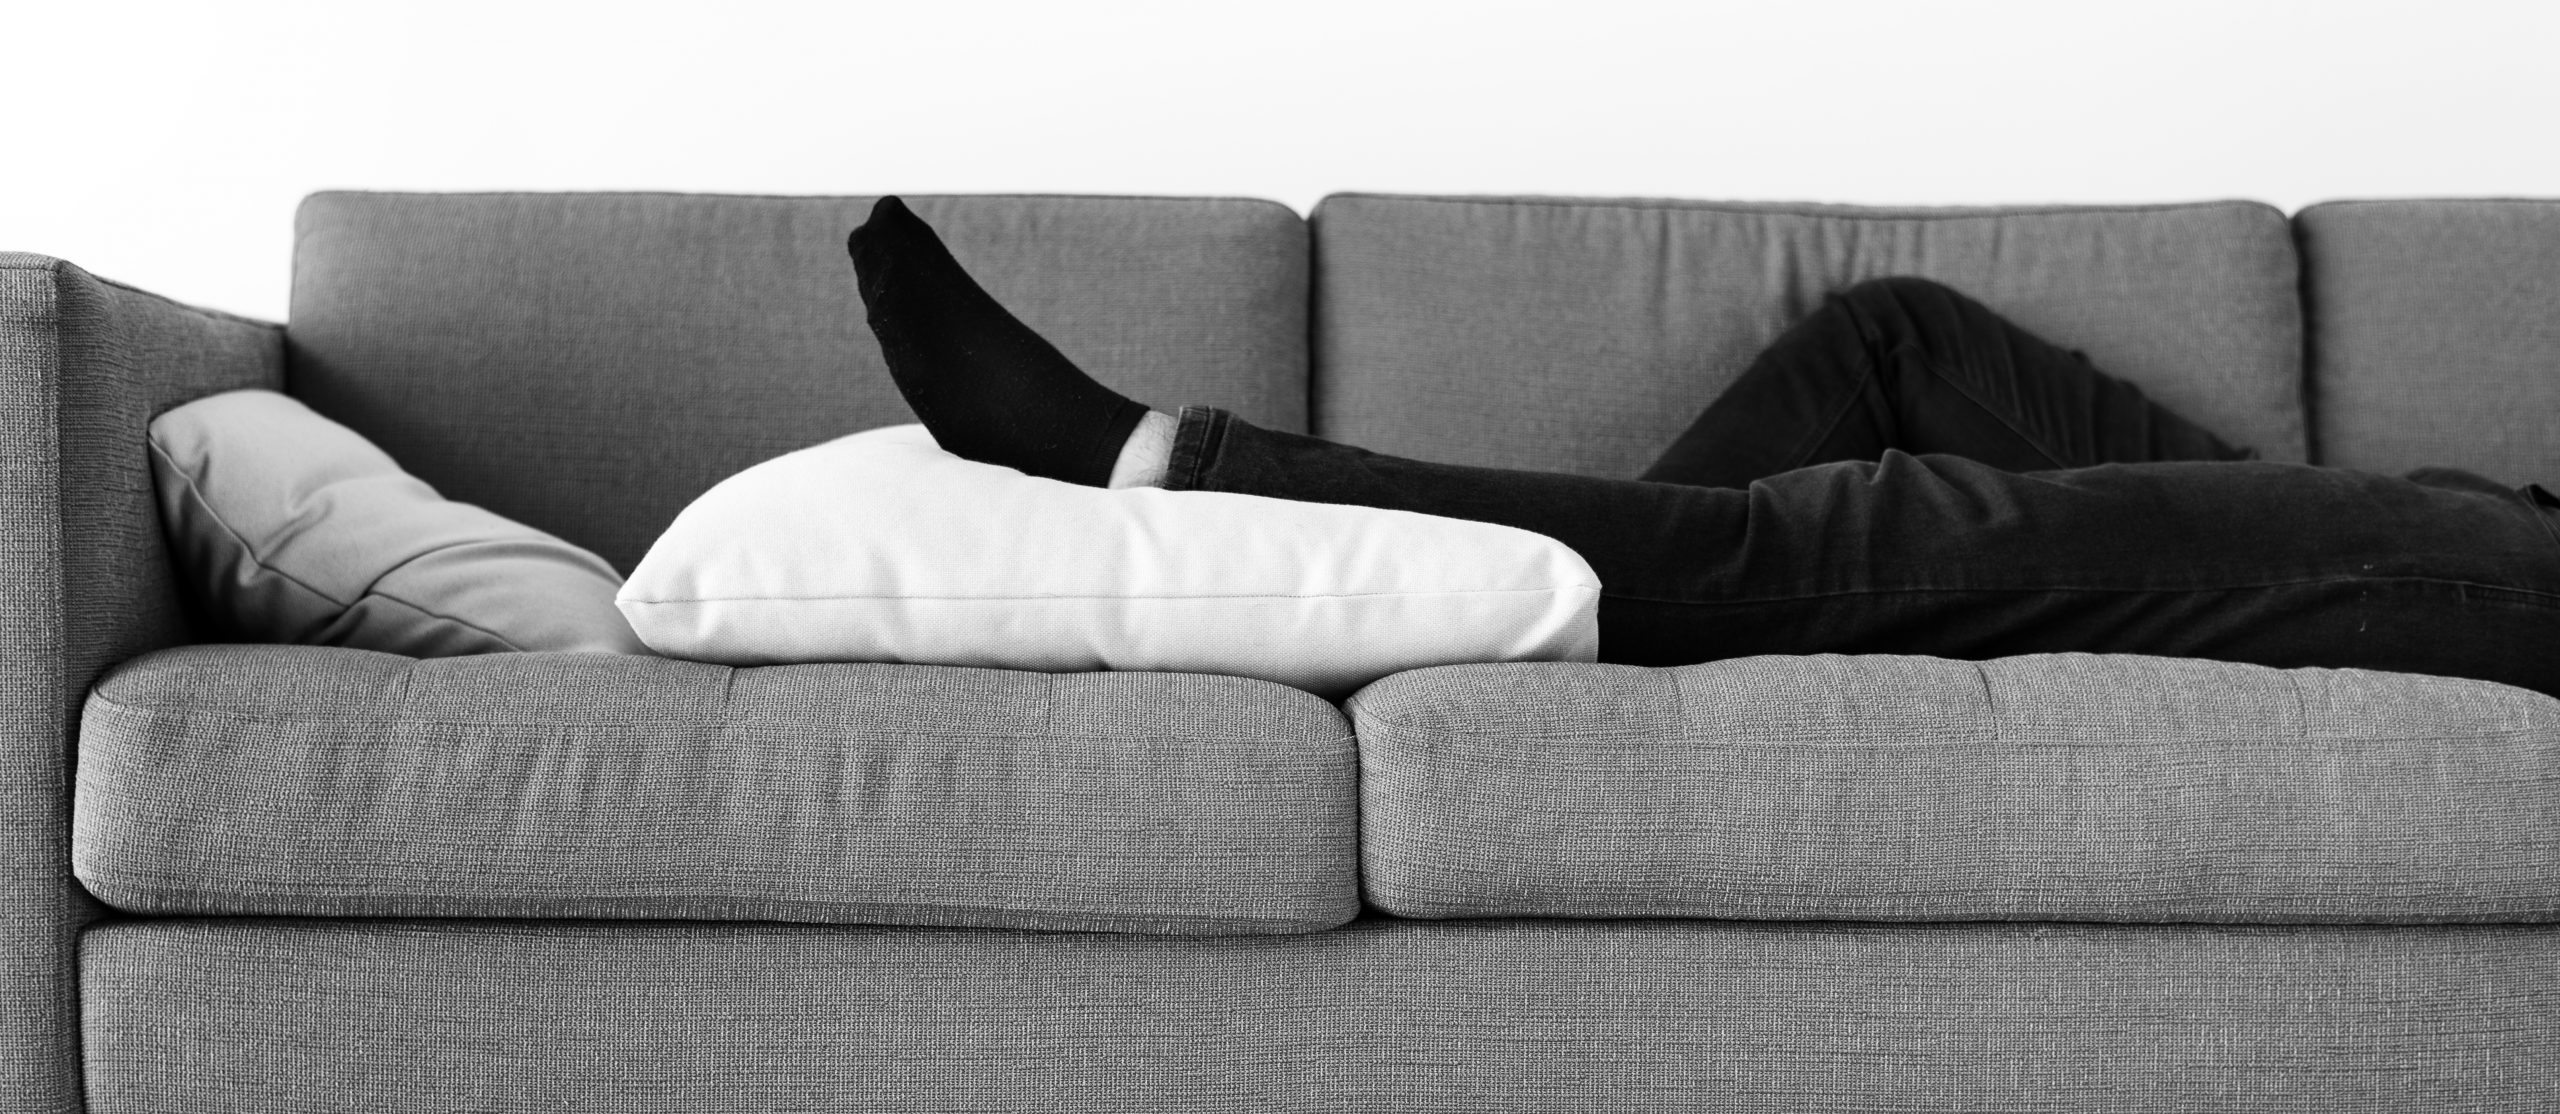 man-sleeping-on-the-sofa-PSXPTVC